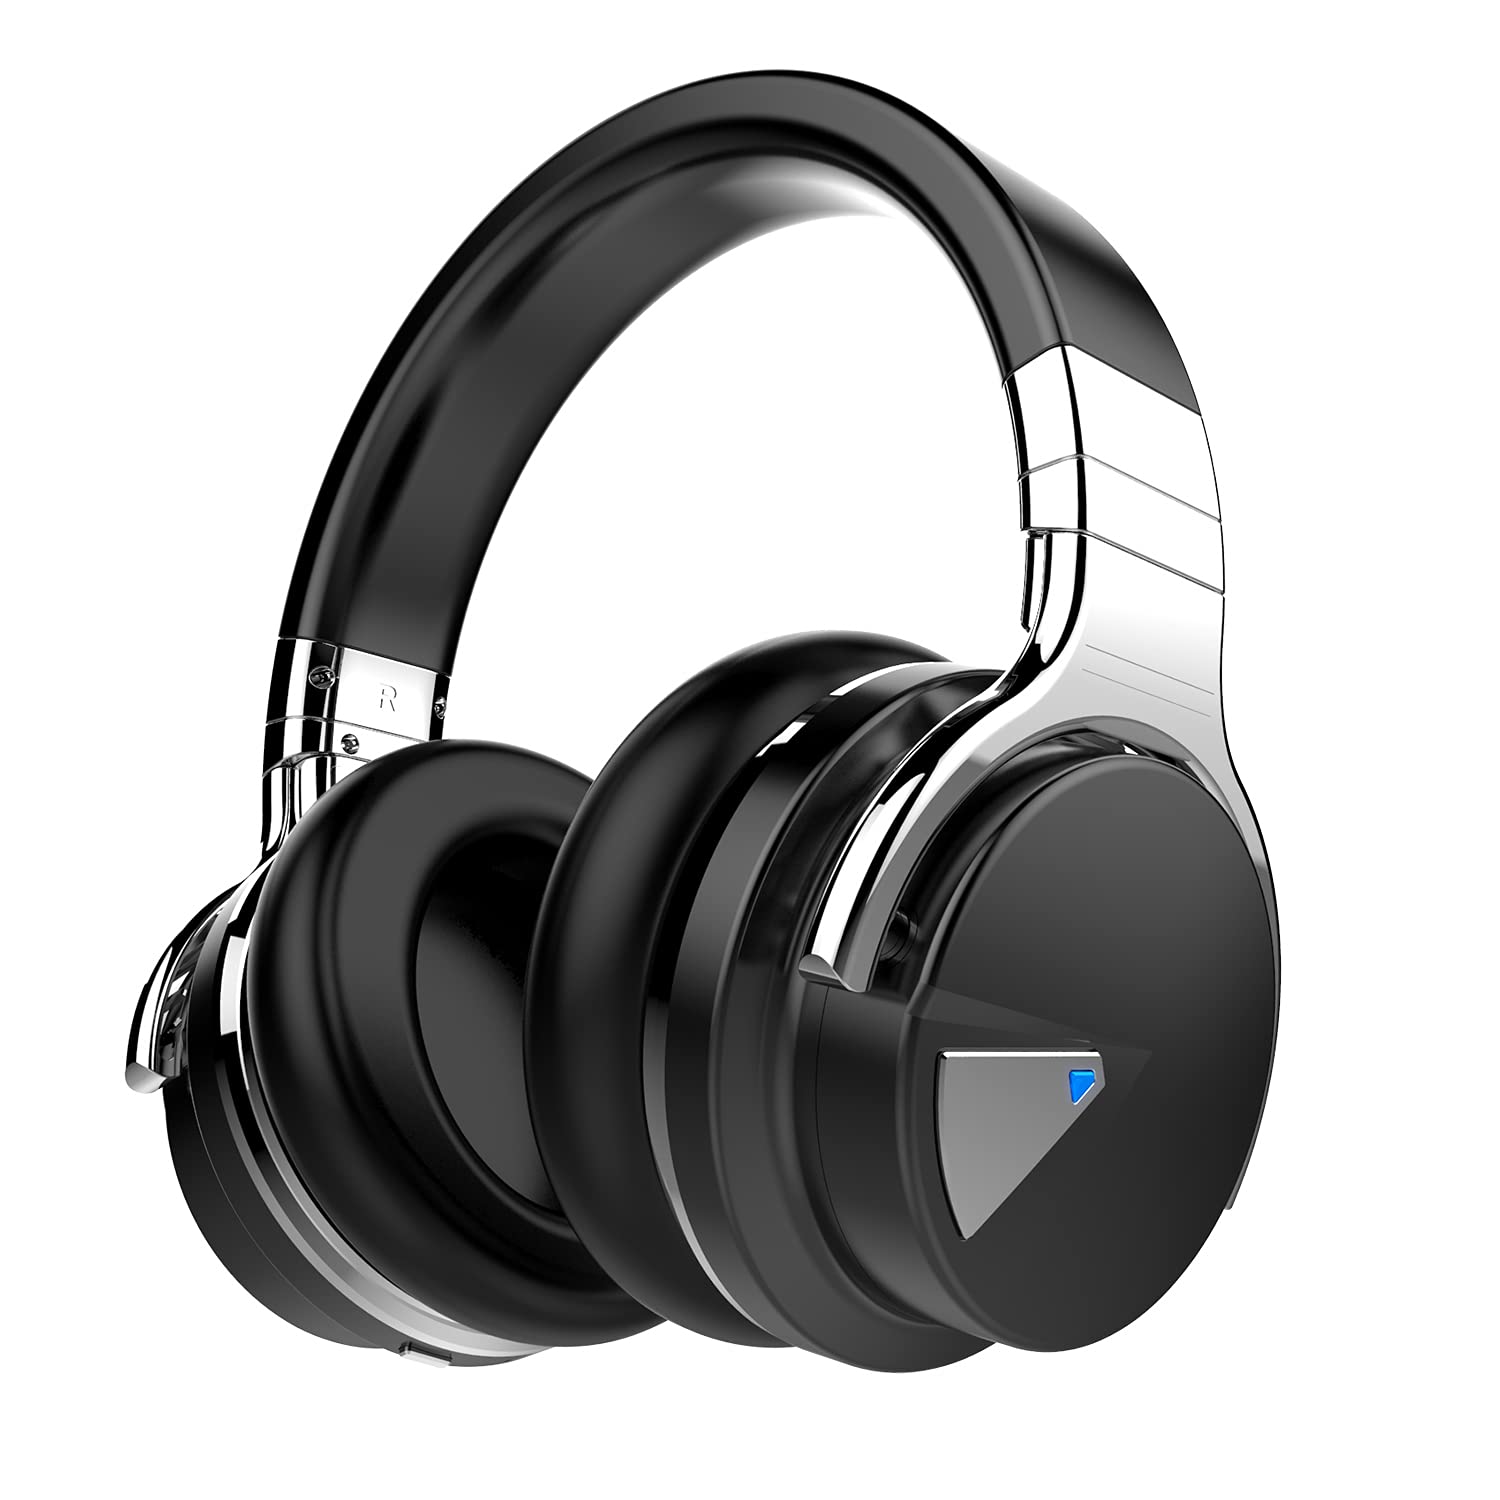 Qisebin E7 Headphones Active Noise Cancelling Headphones Bluetooth Headphones with Microphone Deep Bass Wireless Headphones Over Ear, Comfortable P...